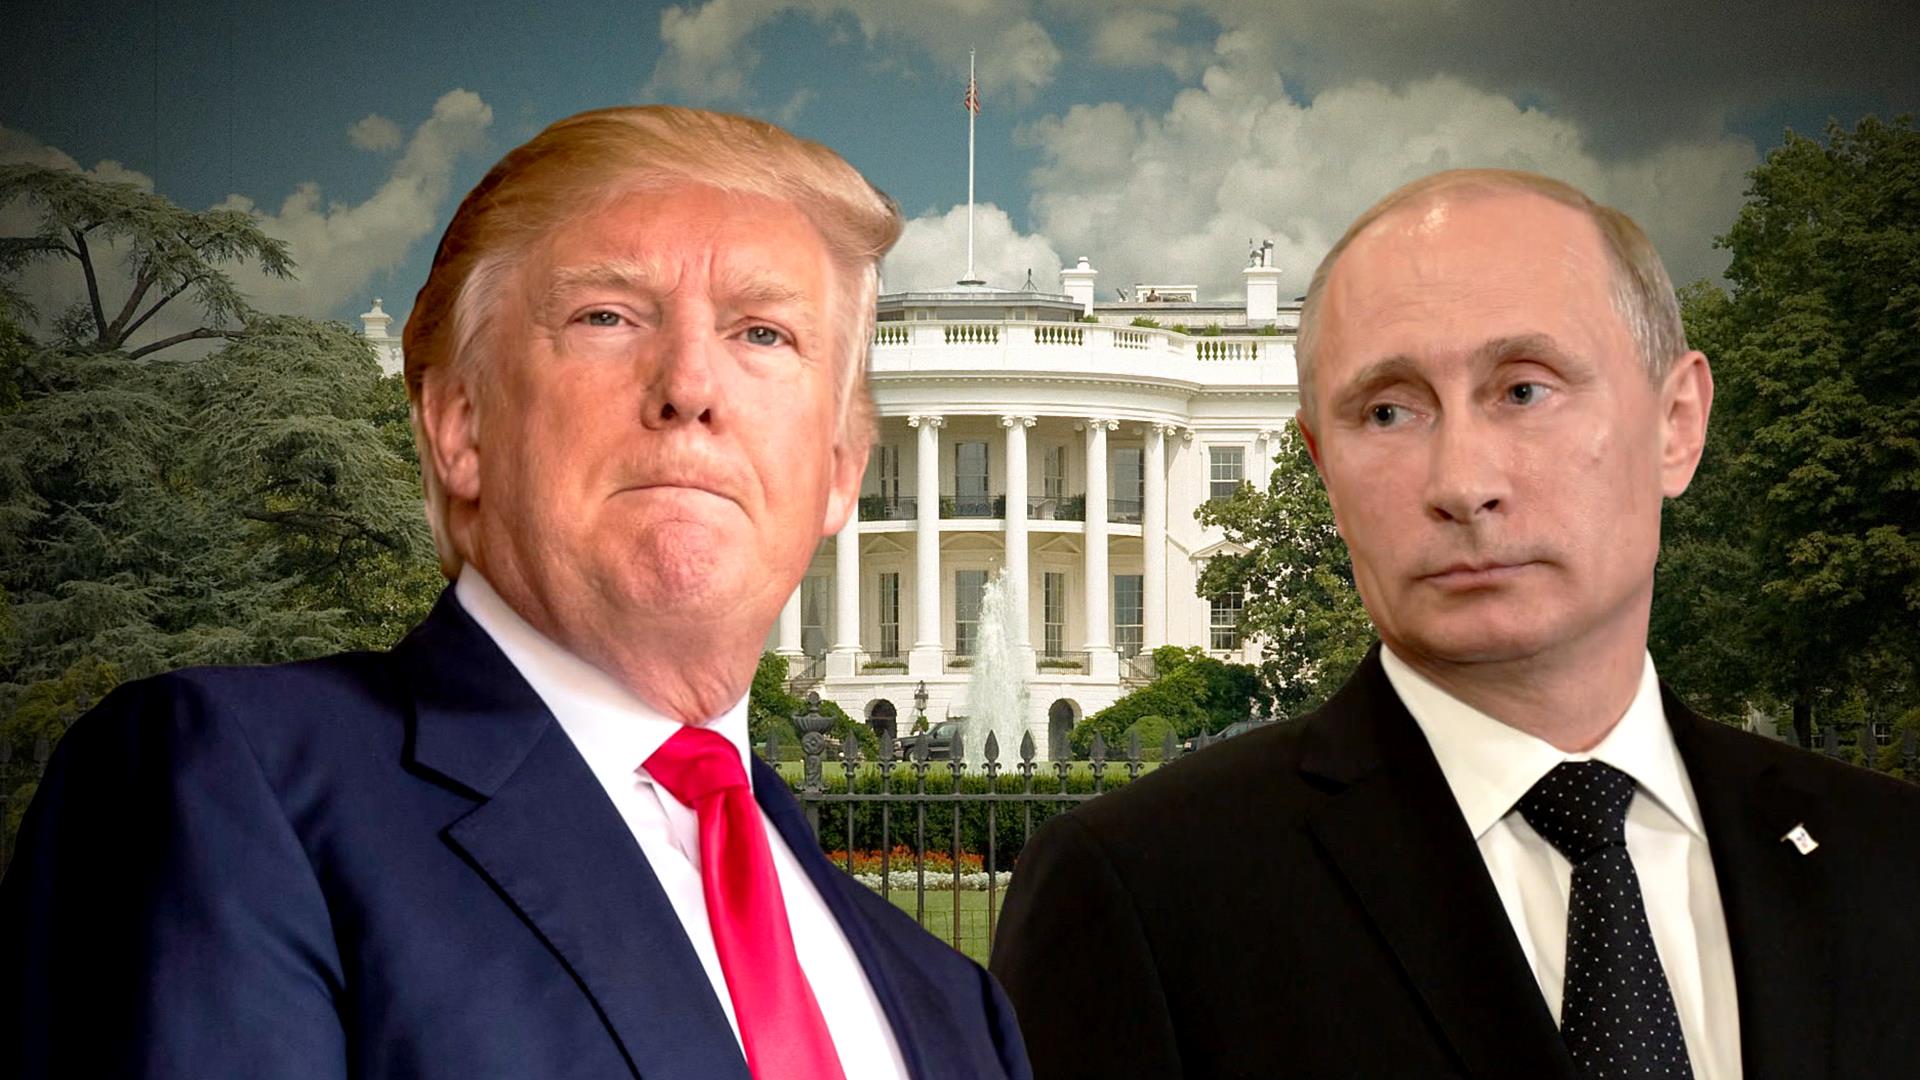 Trump's defense of 'killer' Putin sparks backlash from both parties